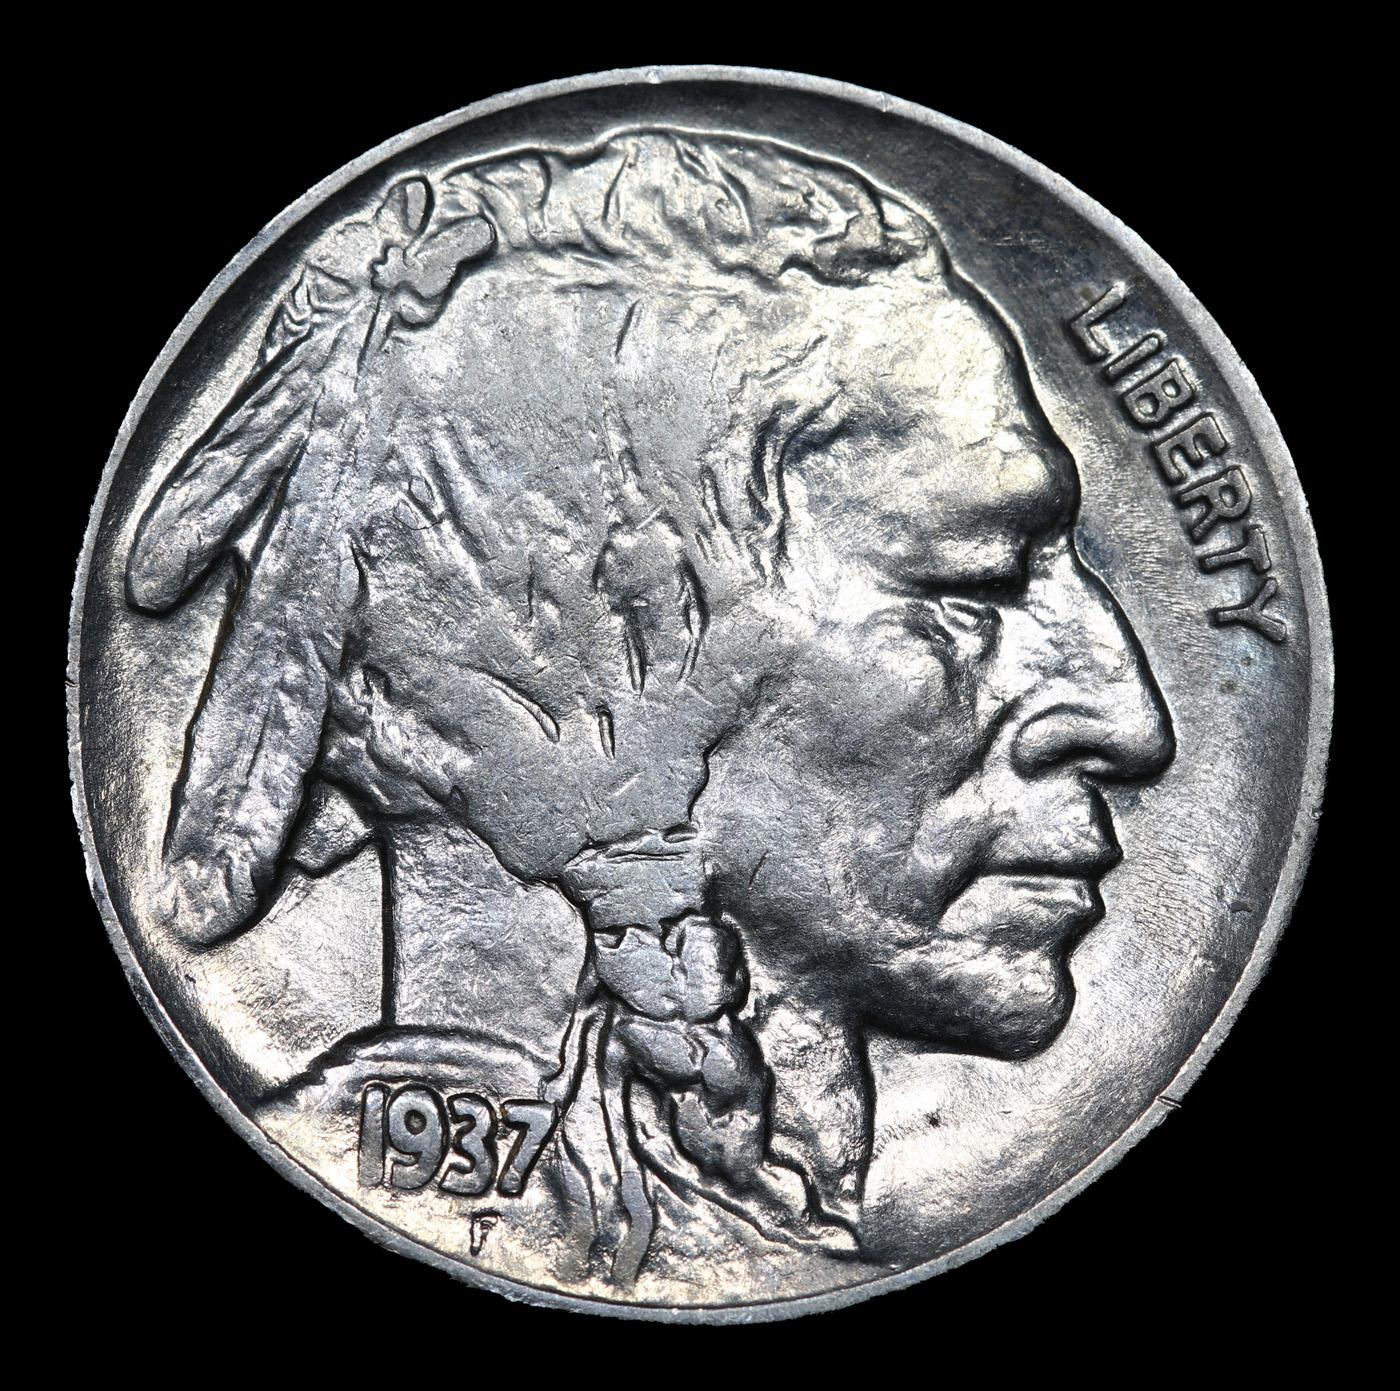 1937-p Buffalo Nickel 5c Grades Select AU